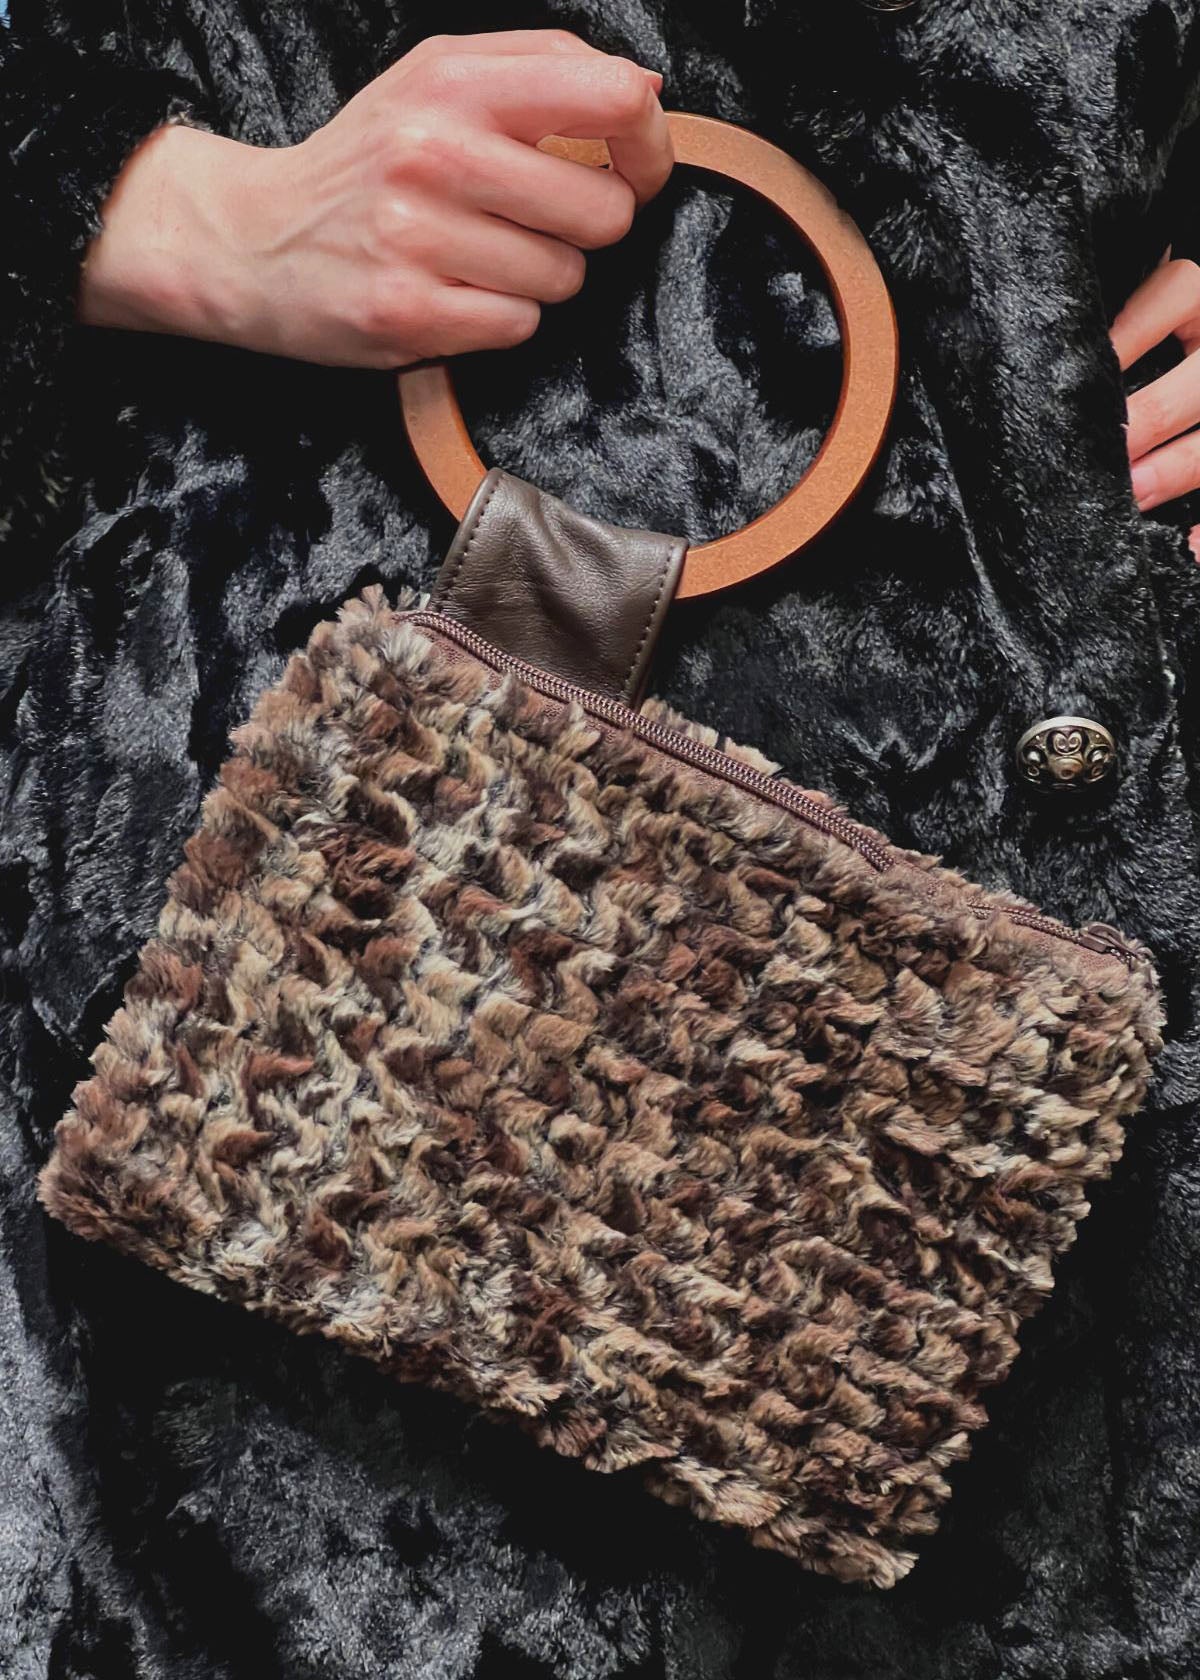 Women's Small Paris Clutch in Calico Luxury Faux Fur | Handmade in Seattle WA | Pandemonium Millinery